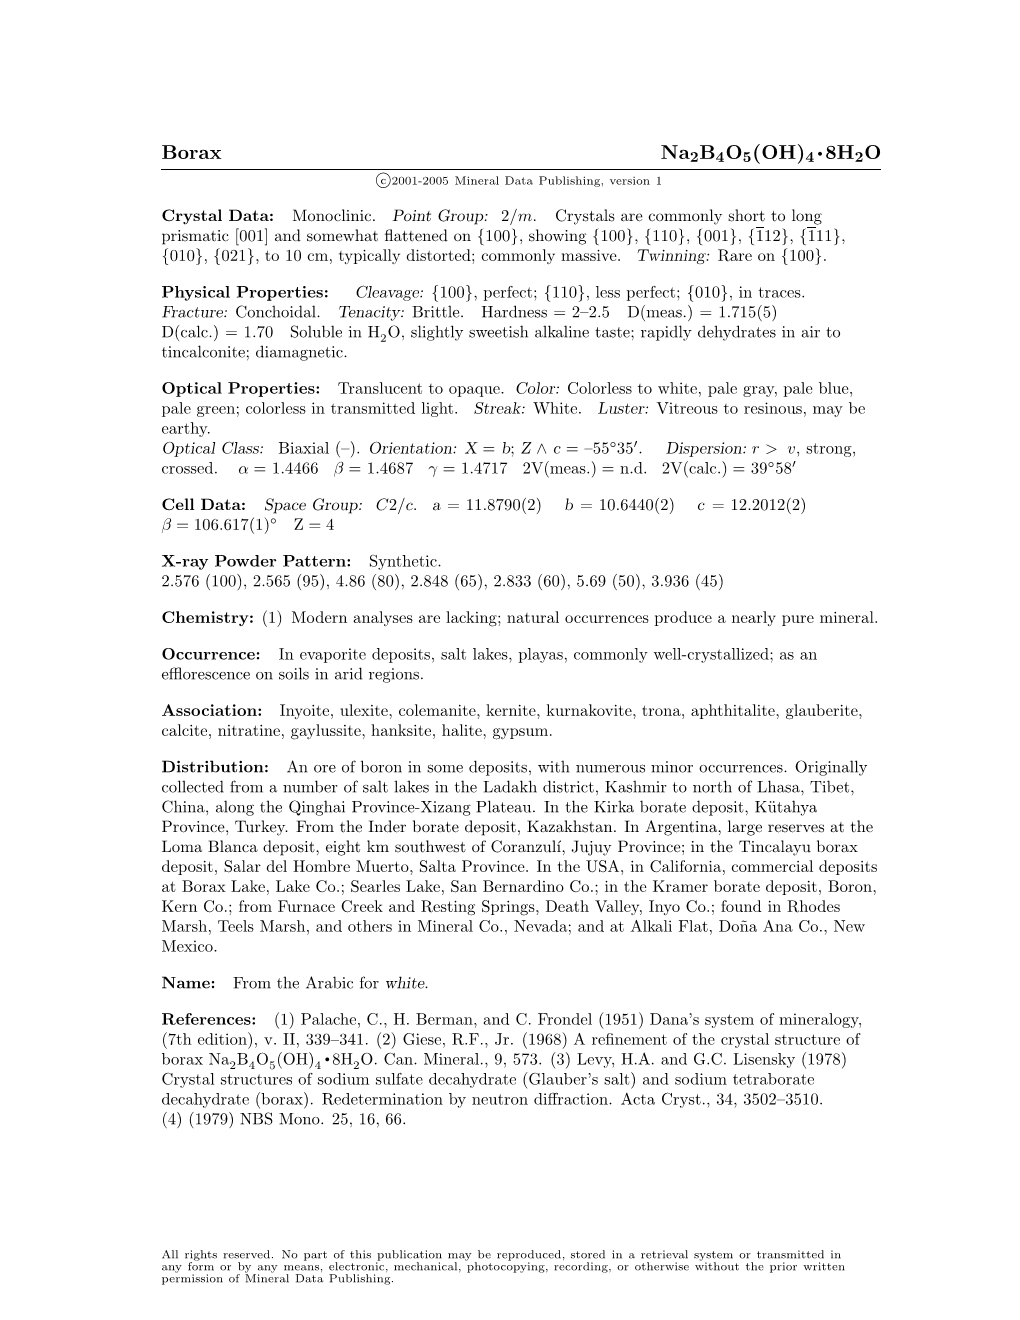 Borax Na2b4o5(OH)4 • 8H2O C 2001-2005 Mineral Data Publishing, Version 1